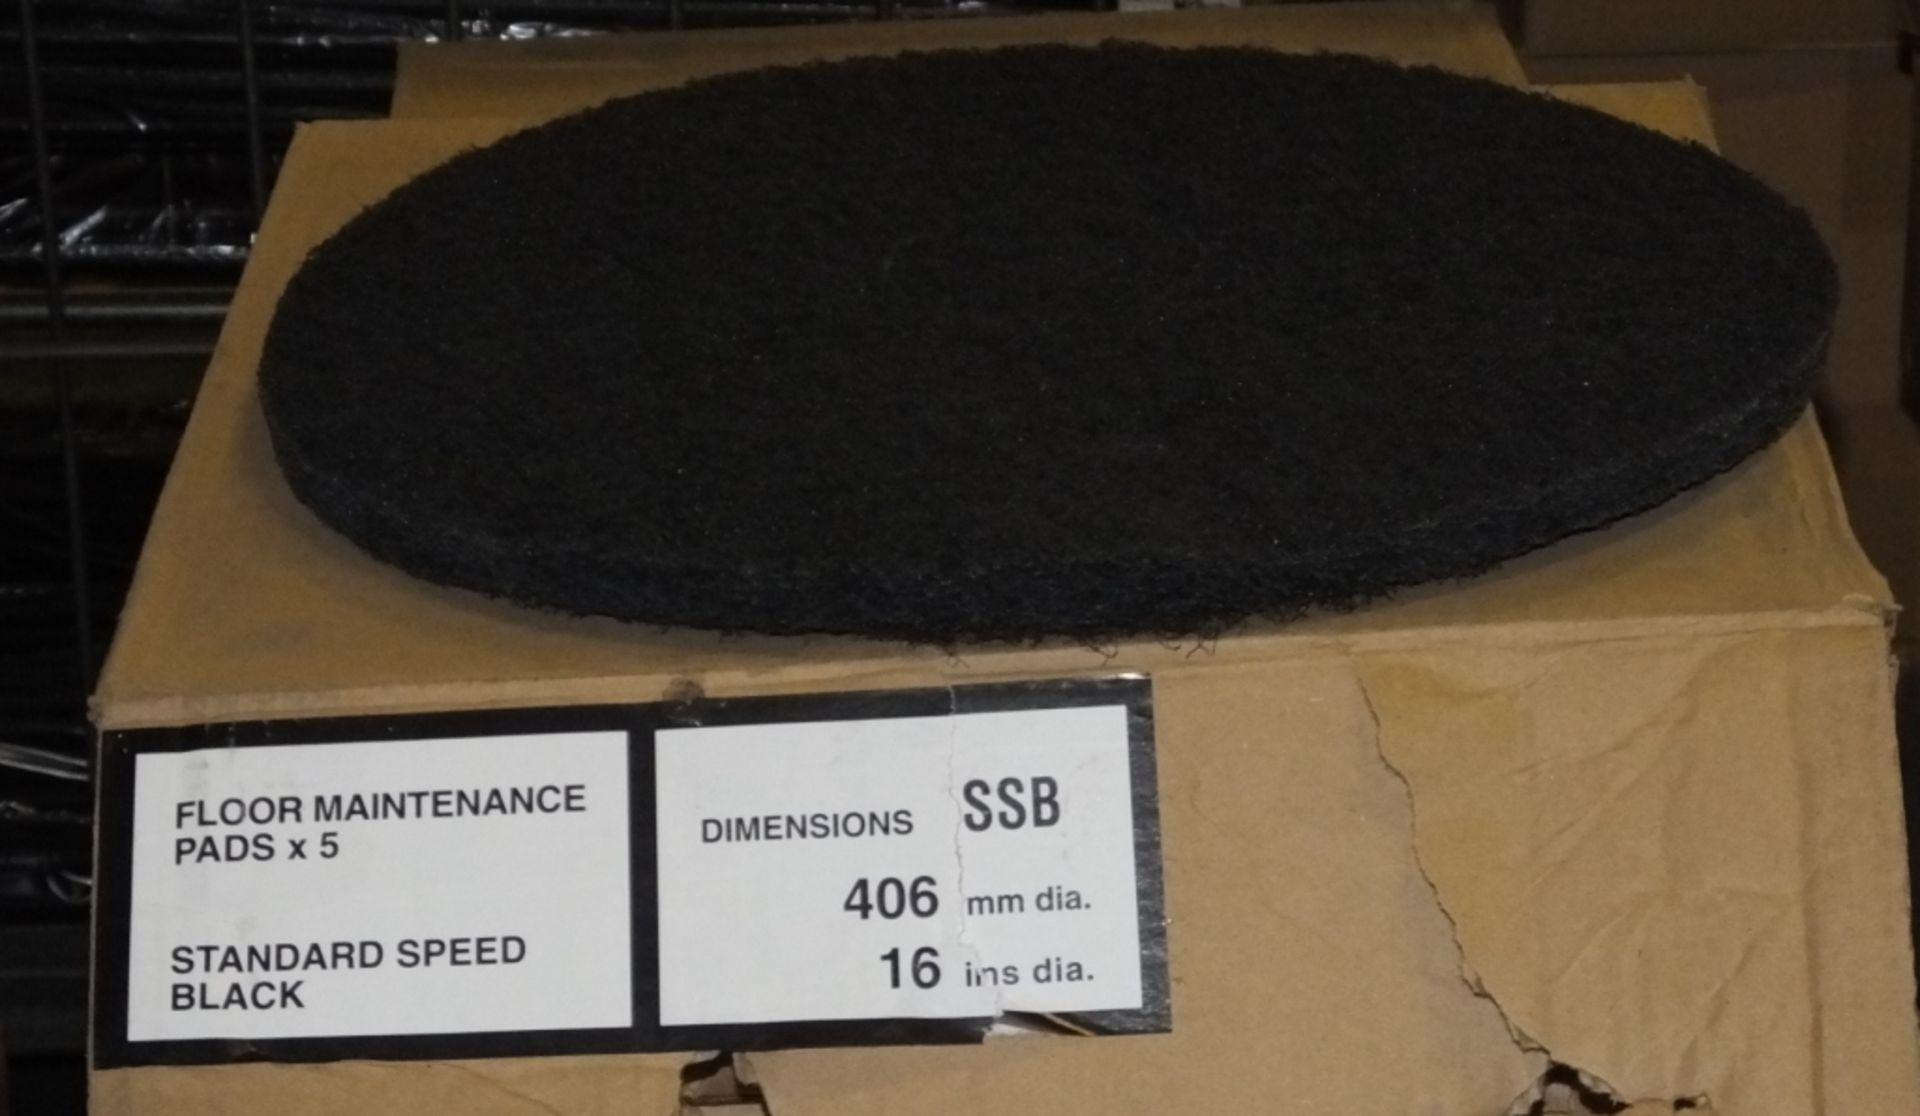 Floor Maintenance pads - Black - 5 per box - 28 boxes - Image 2 of 3